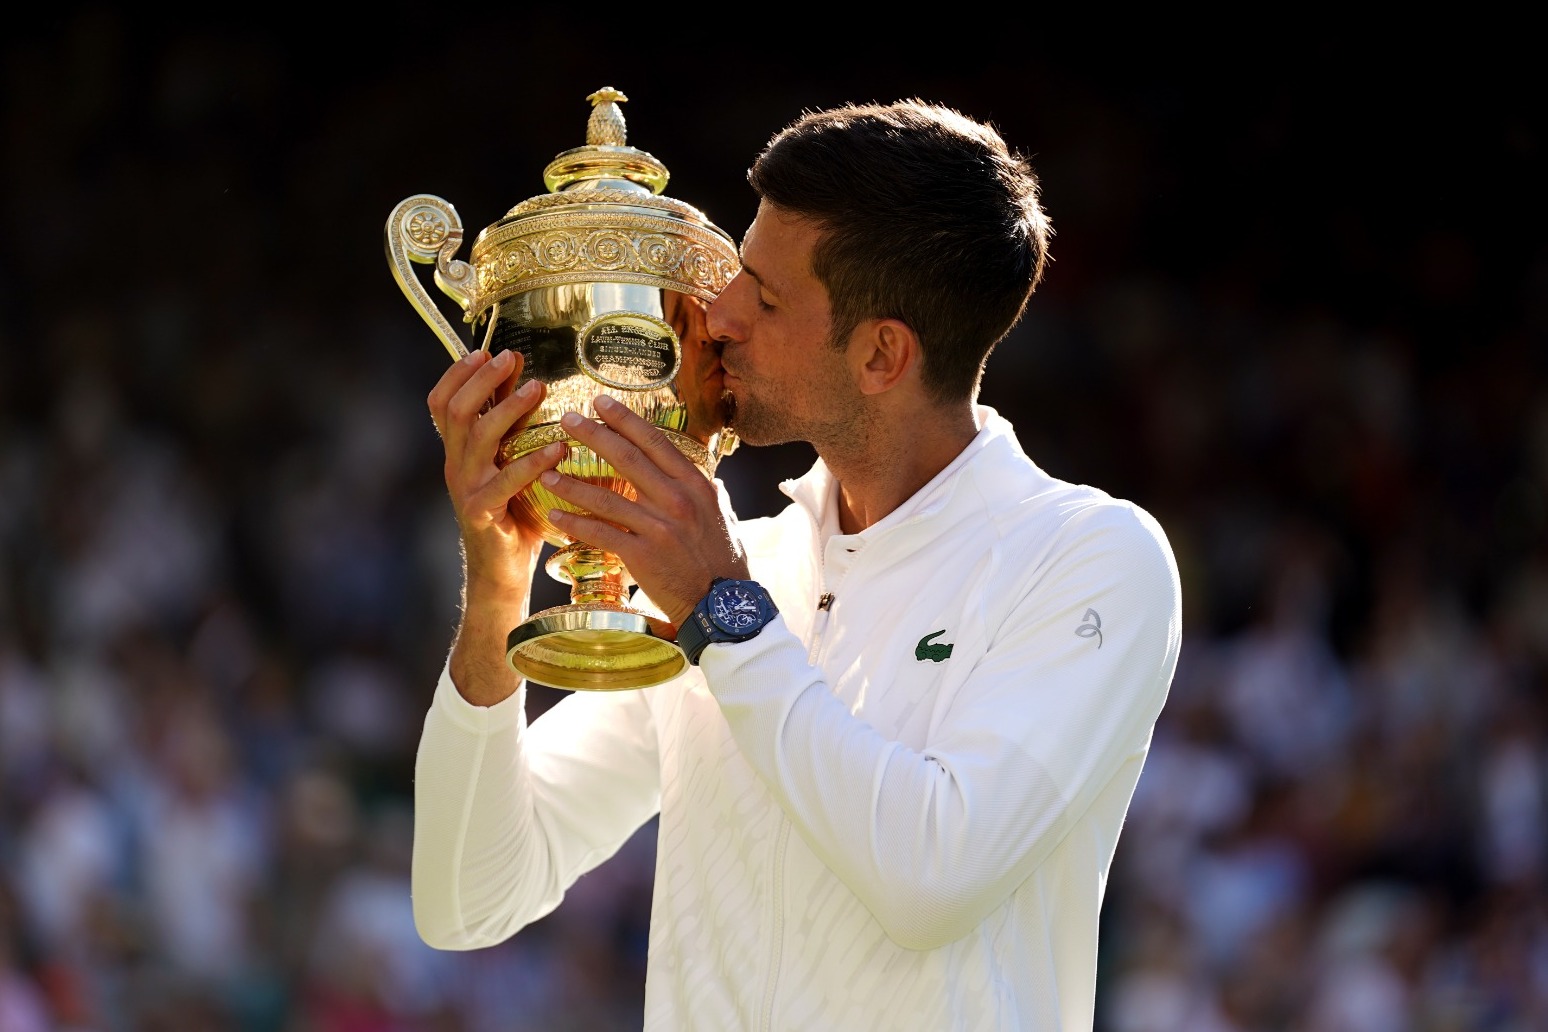 Novak Djokovic in seventh heaven after beating Nick Kyrgios in Wimbledon final 